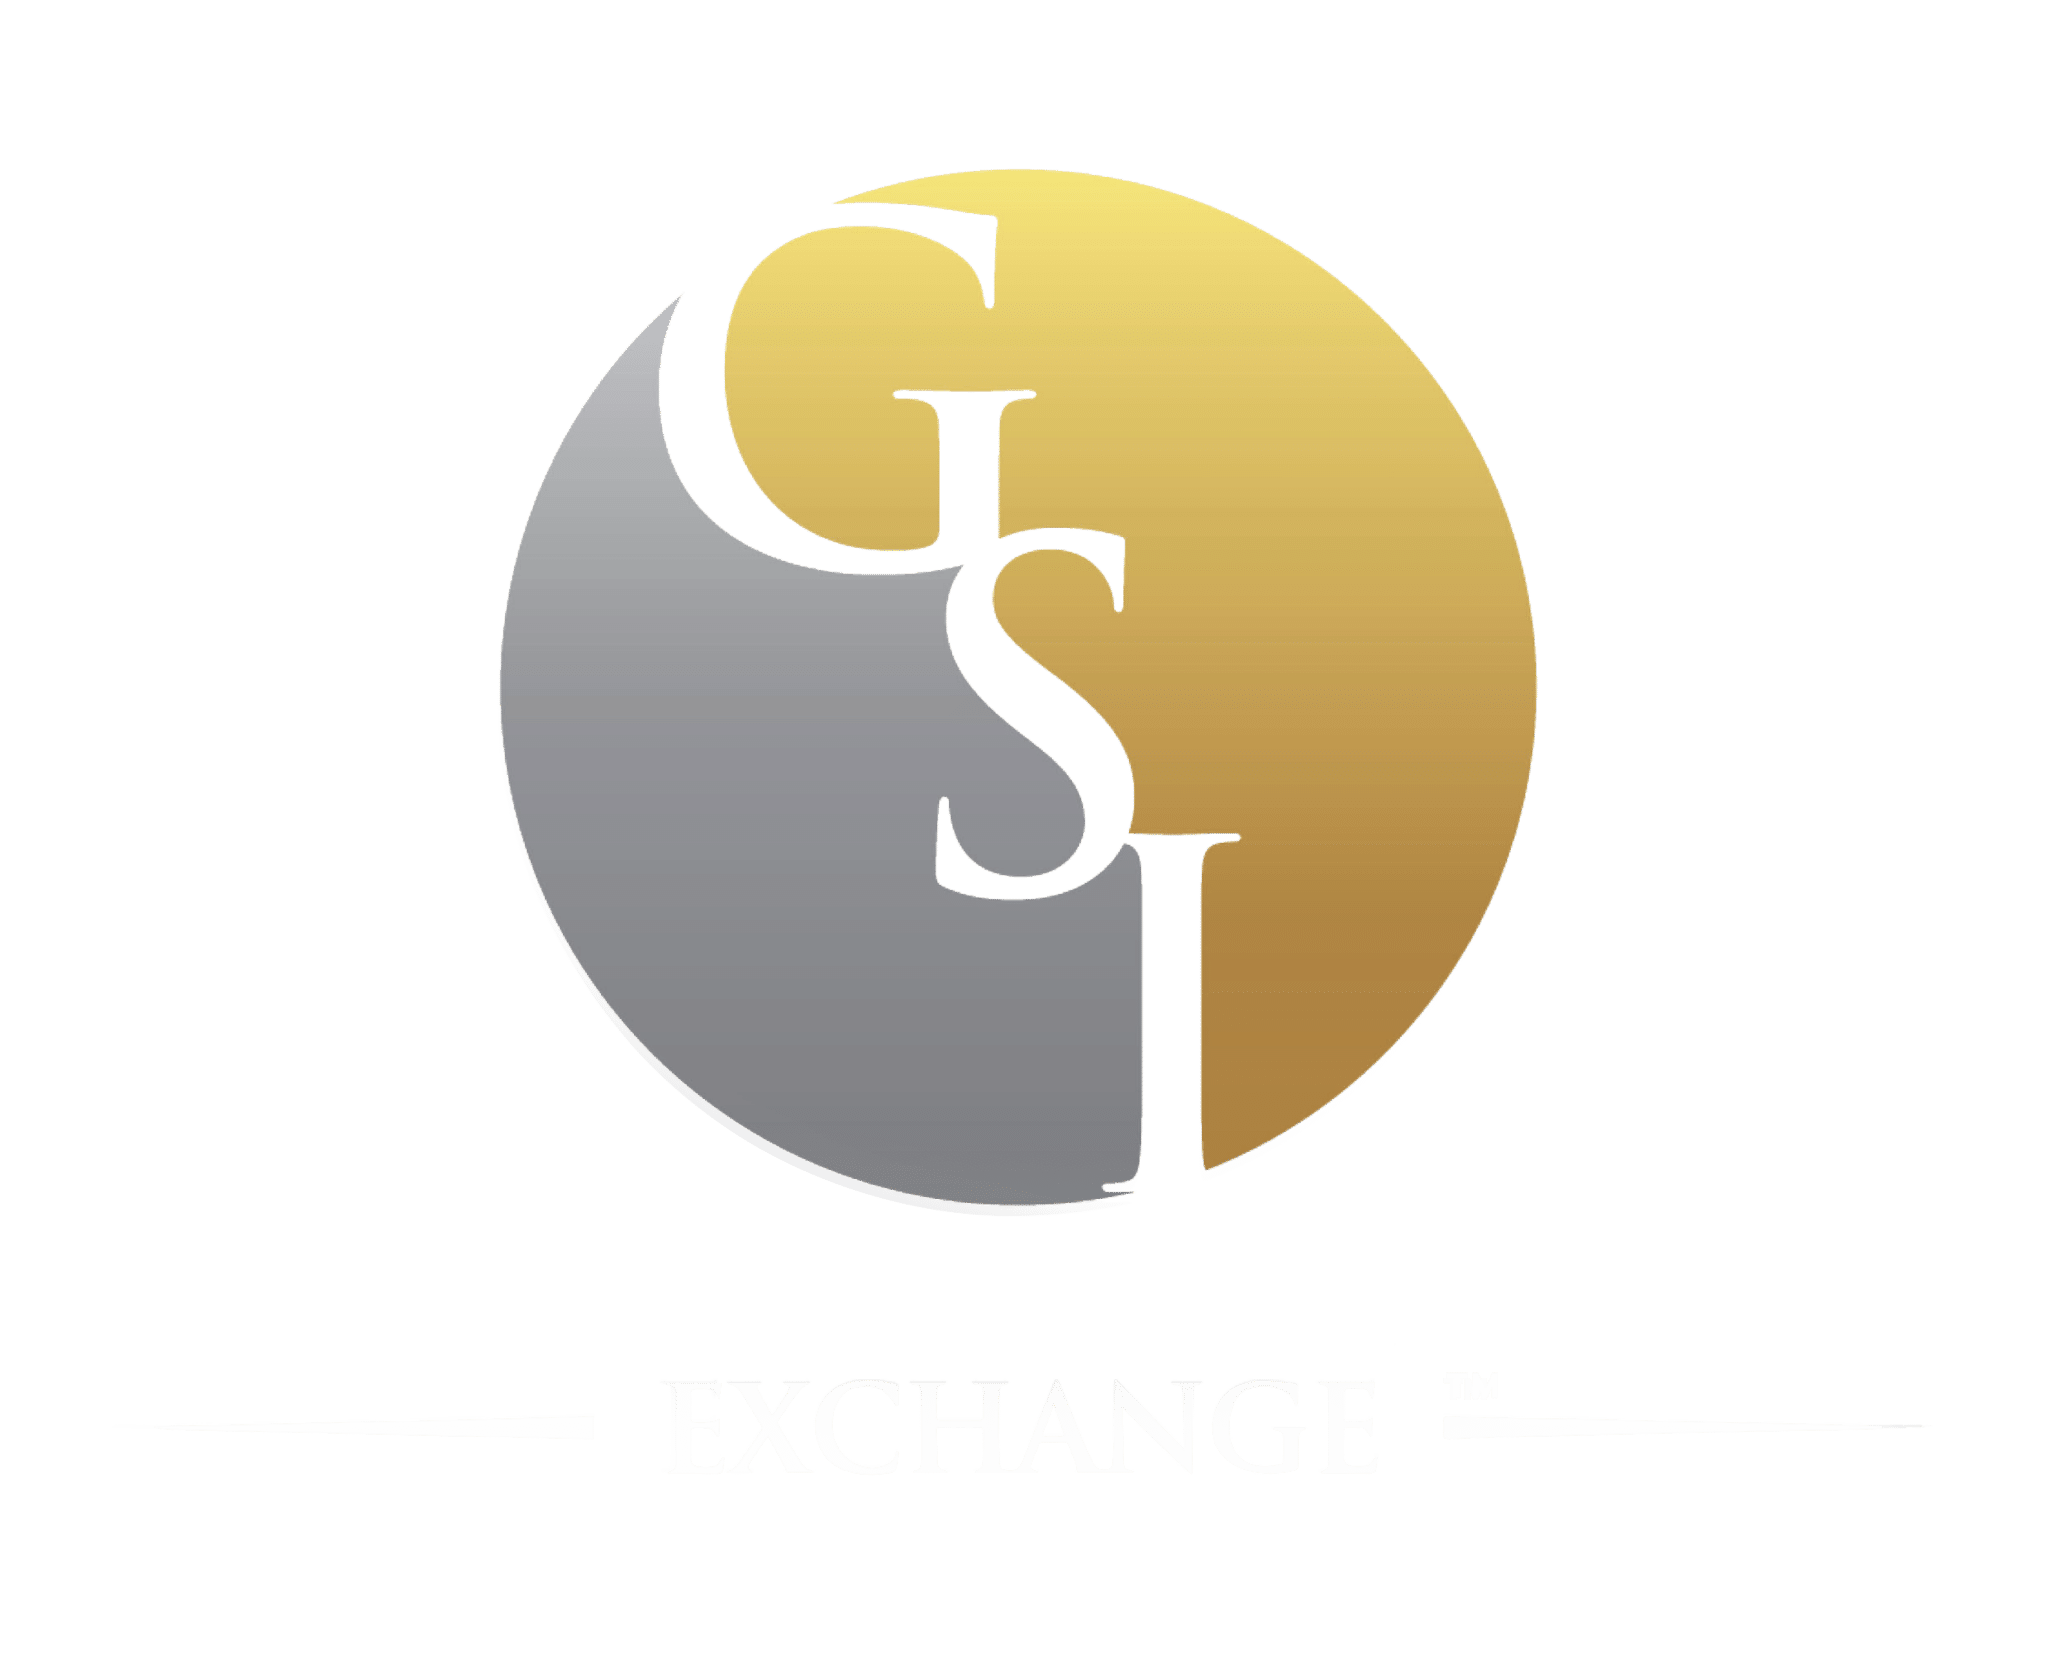 gsi-exchange-tm-logo-1